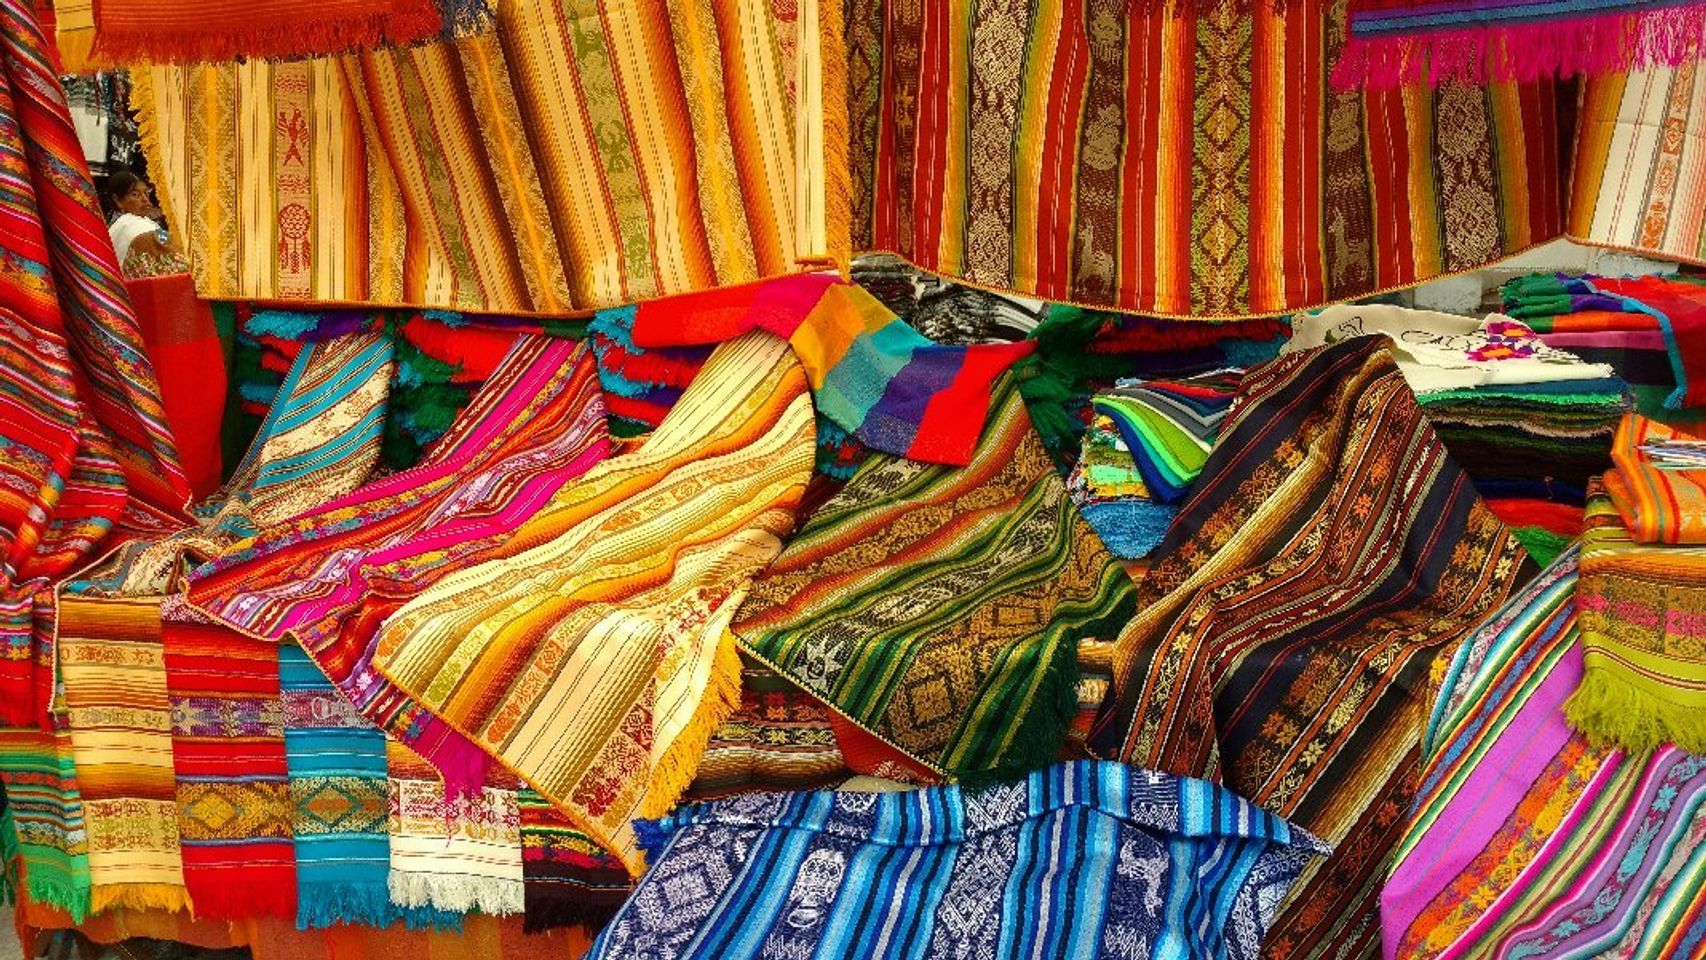 Visit the Otavalo Market.